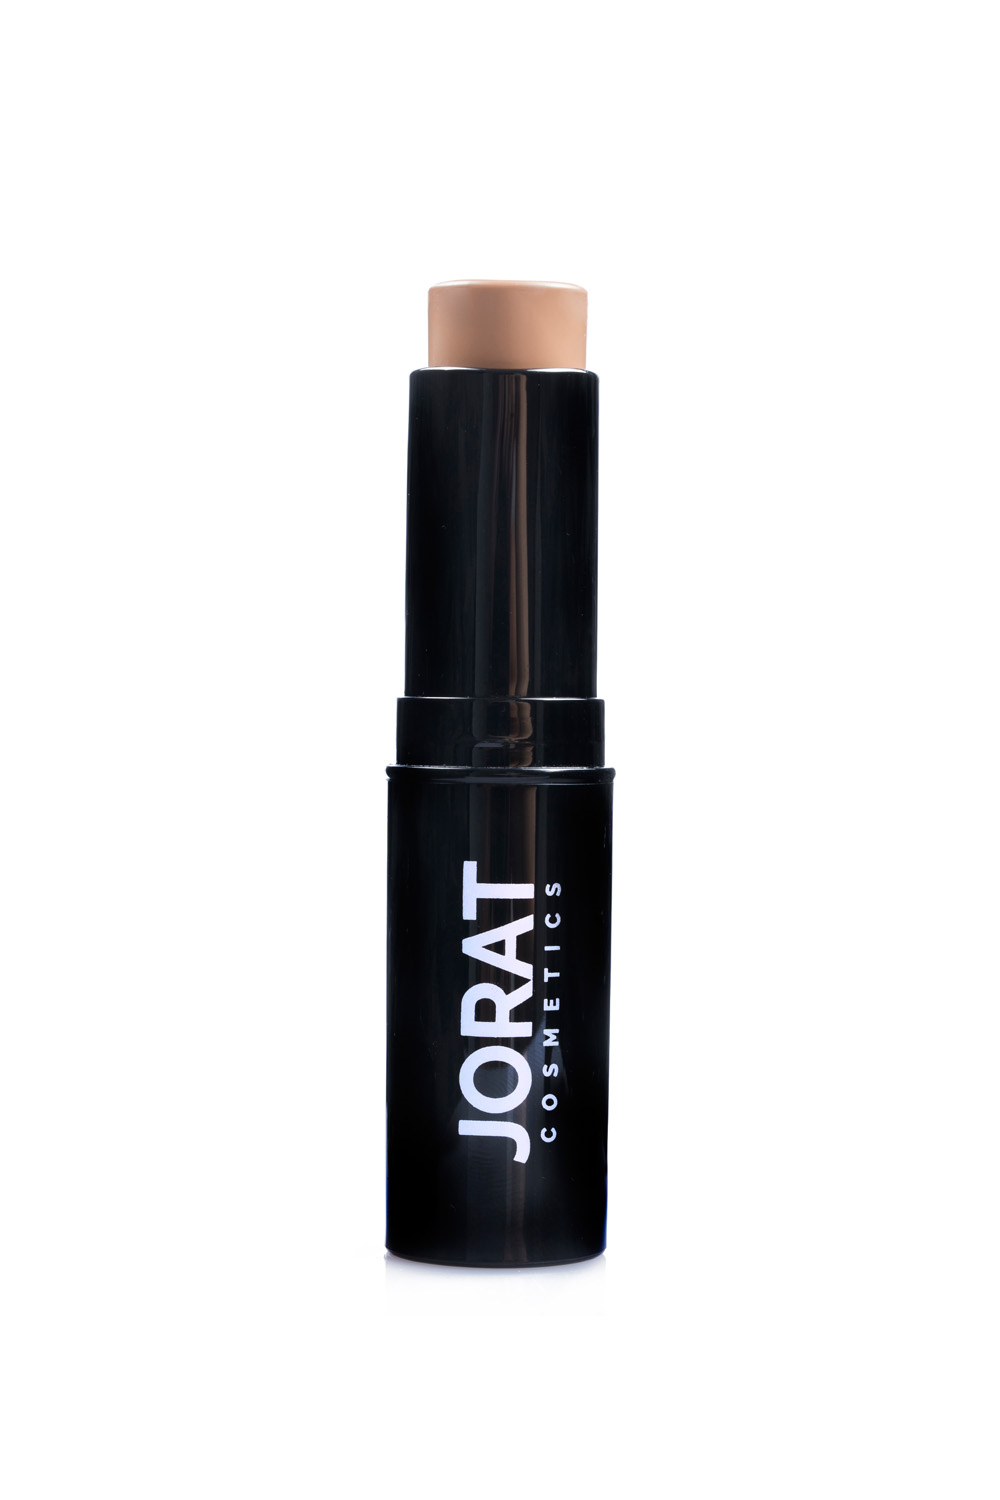 Jorat Cosmetics Beauty Stick Warm C10